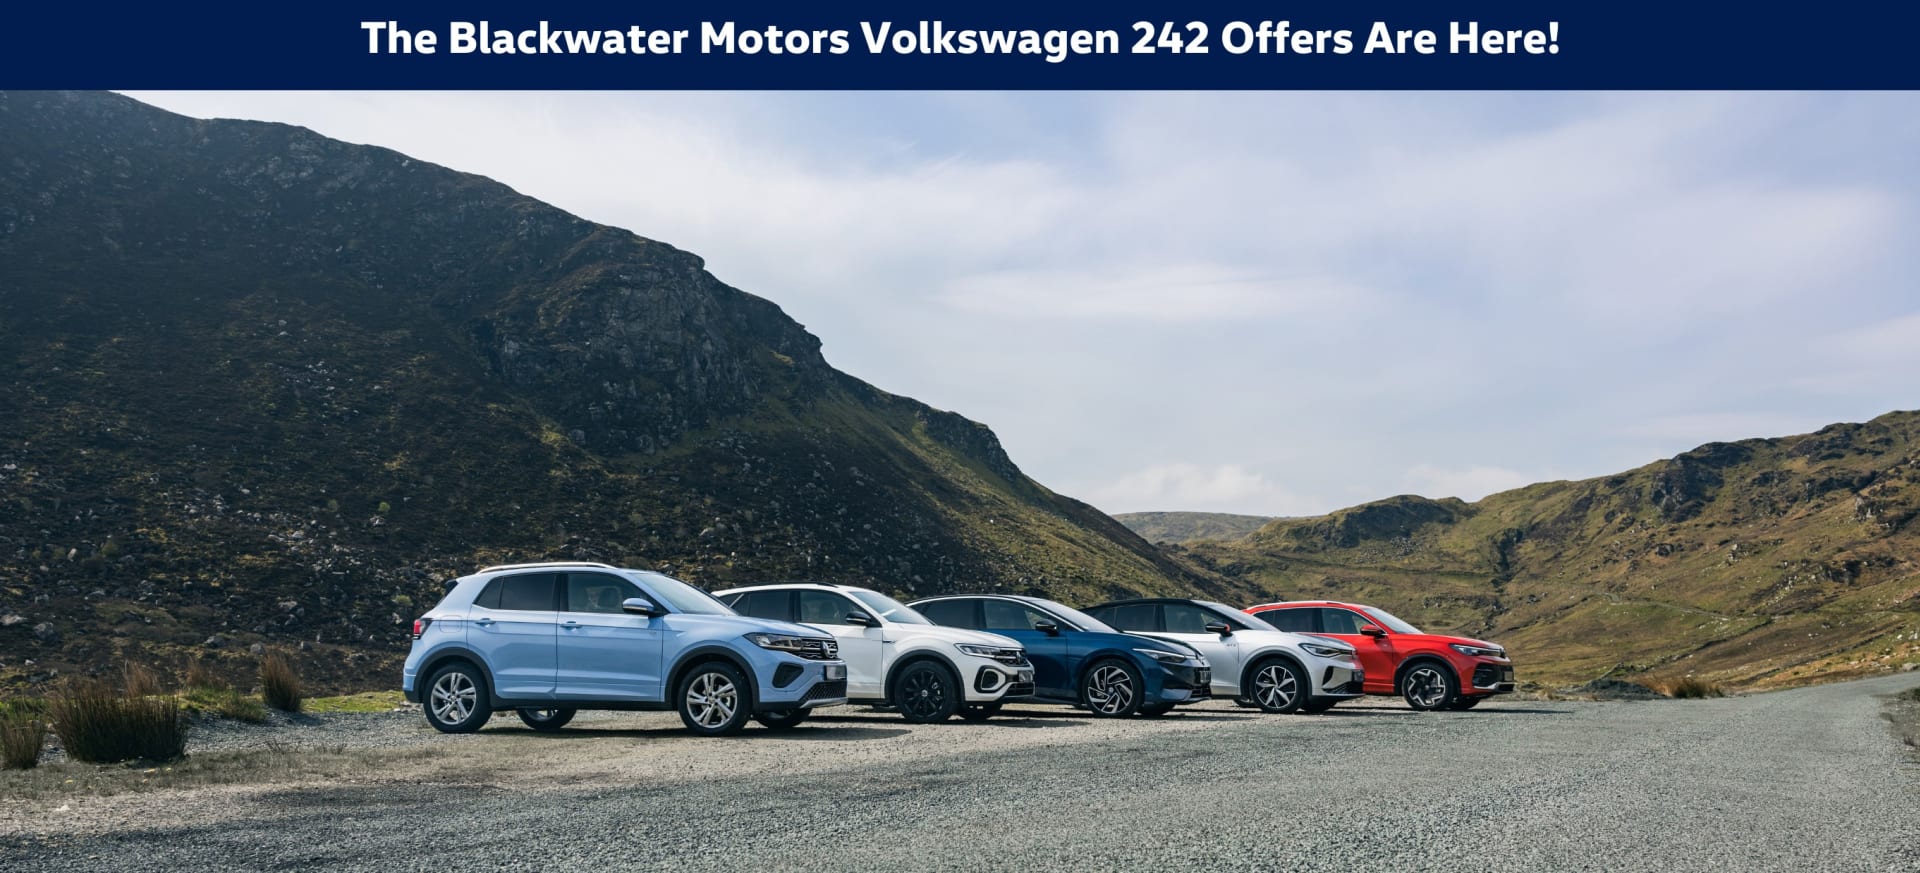 242 VW Offers